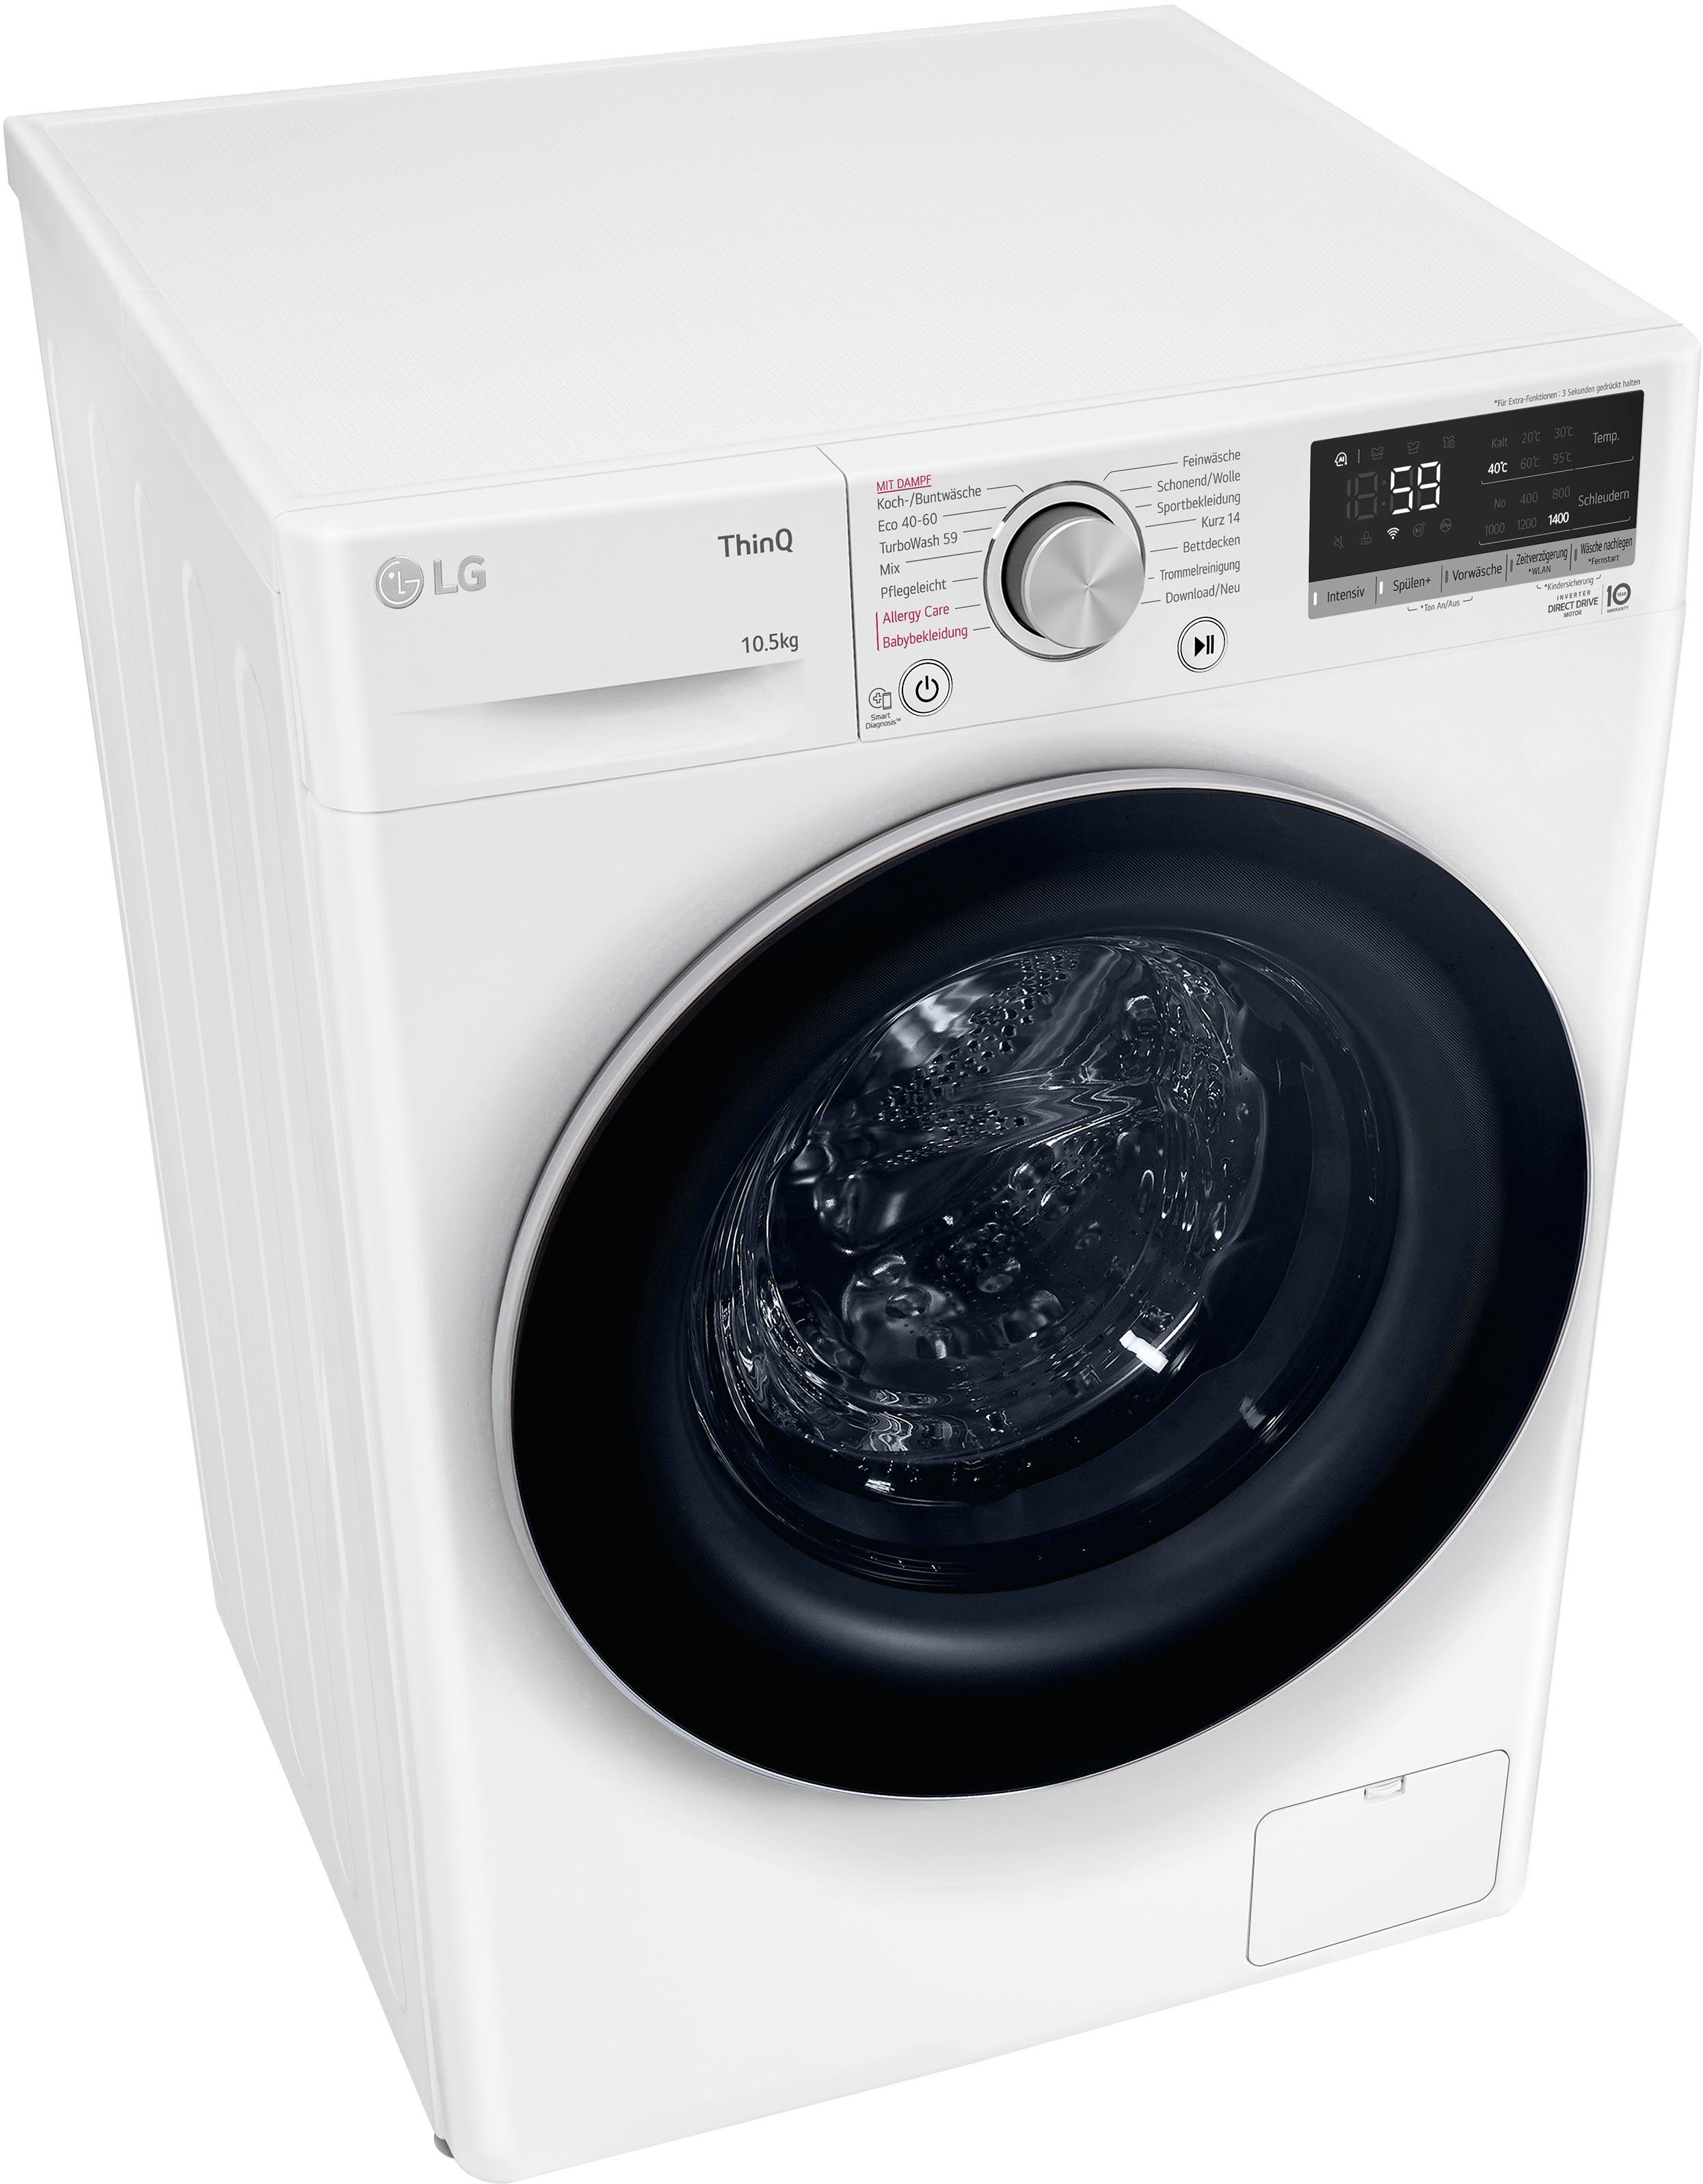 LG Waschmaschine F4WV70X1, 10,5 kg, U/min 1400